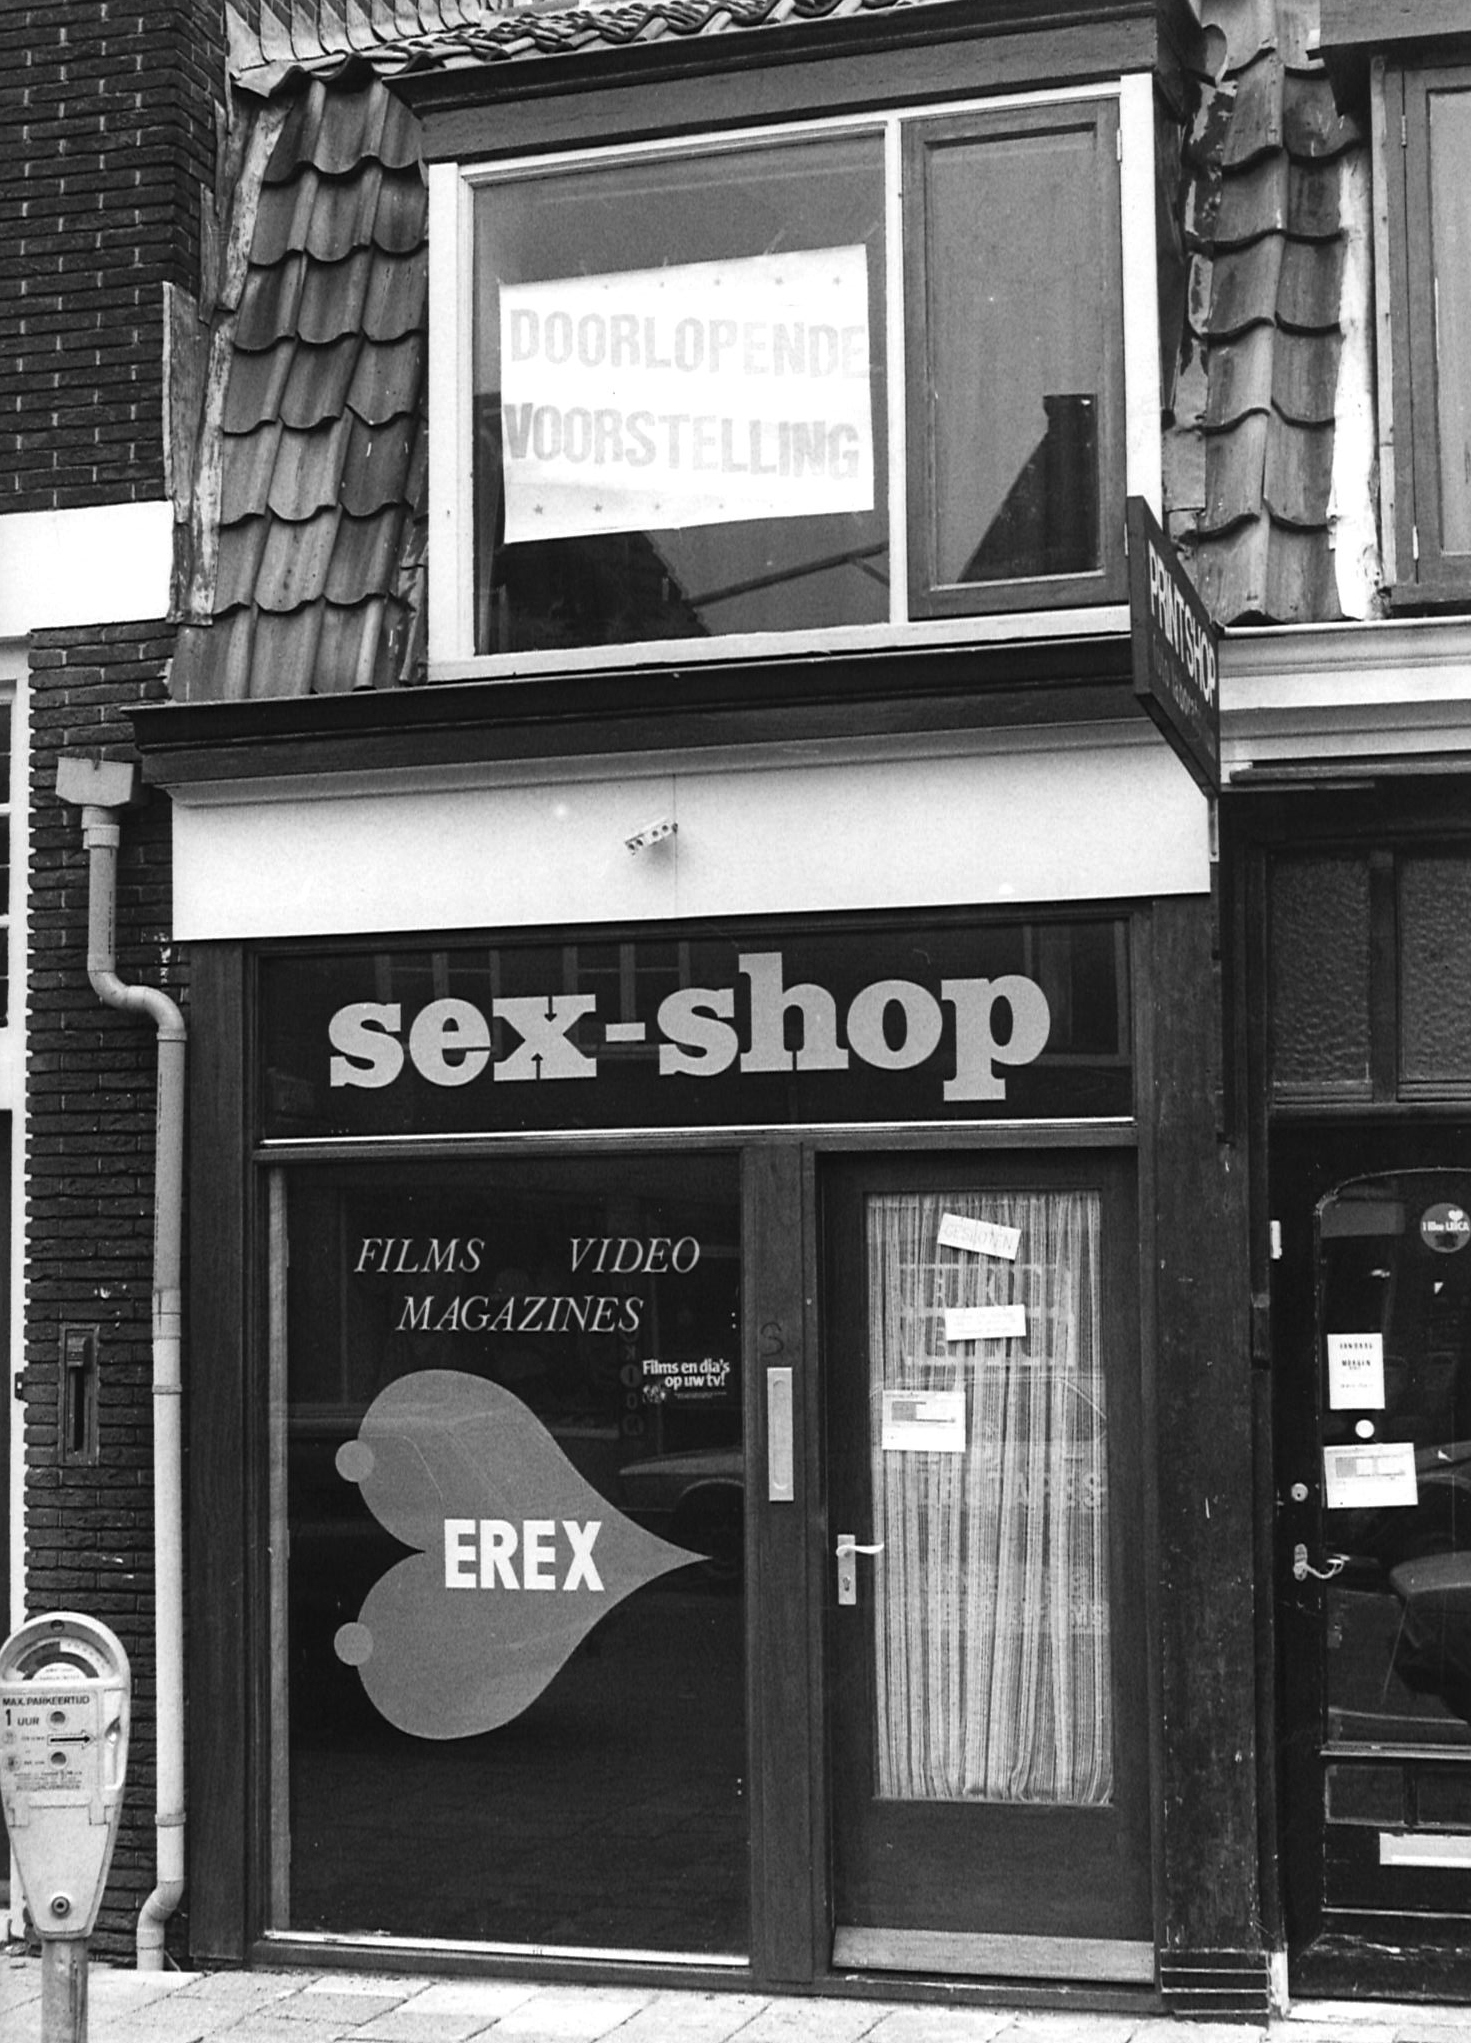 Sex-shop erex